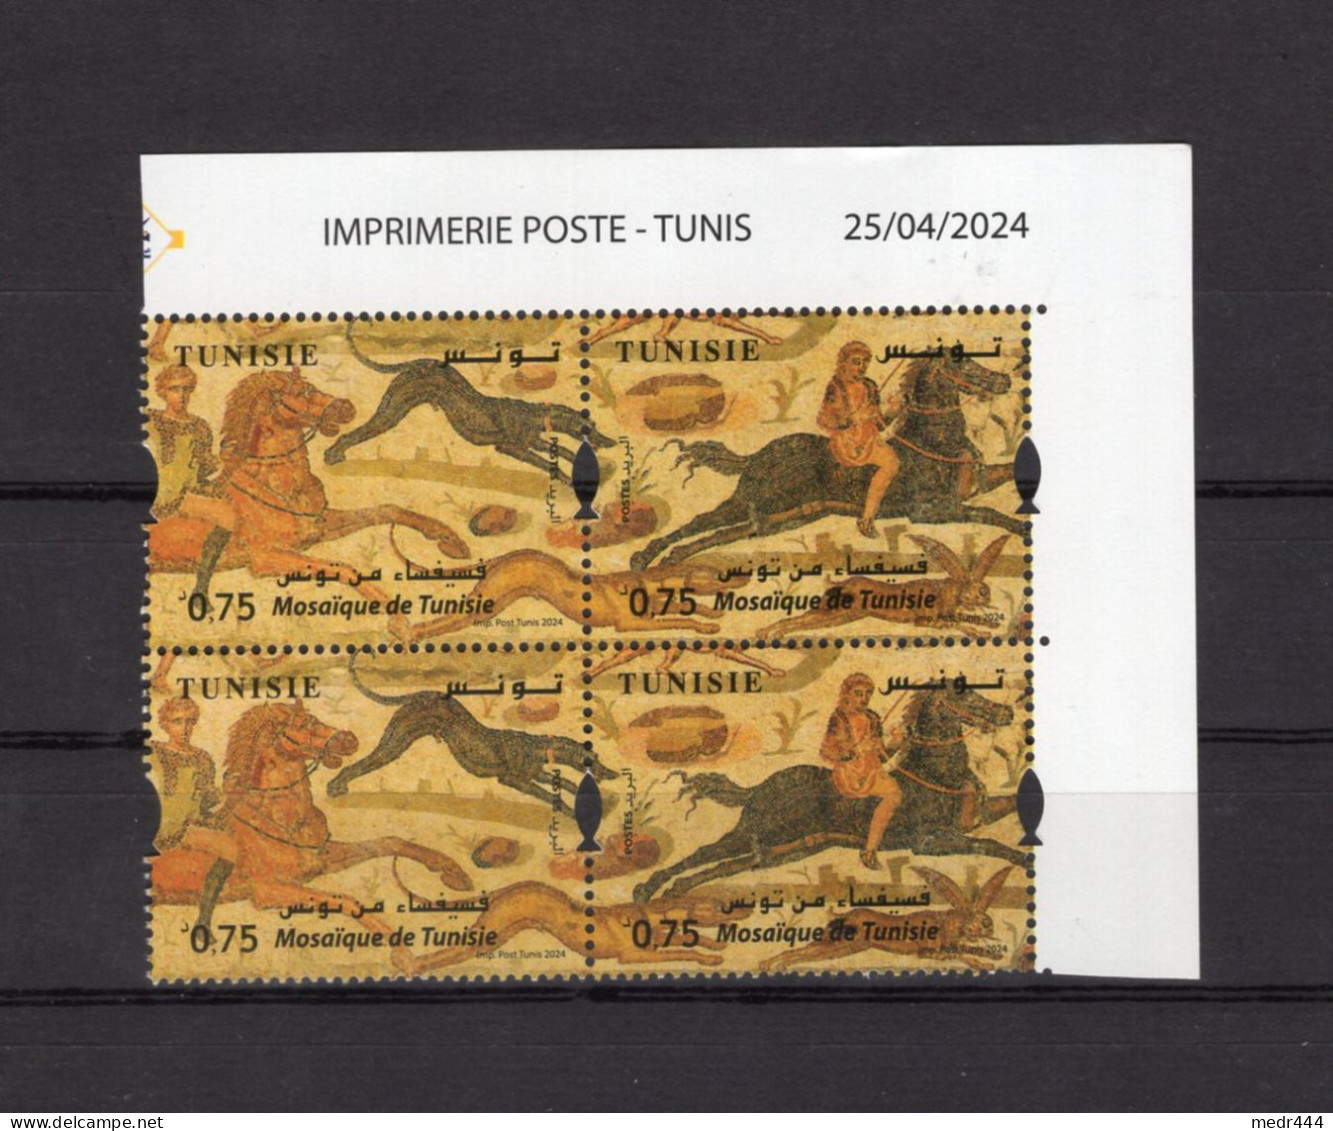 Tunisia/Tunisie 2024 - Mosaics From Tunisia/Mosaïque De Tunisie - Hunting Scene - 2 Strips Of 2 Stamps  - Superb*** - Tunesien (1956-...)